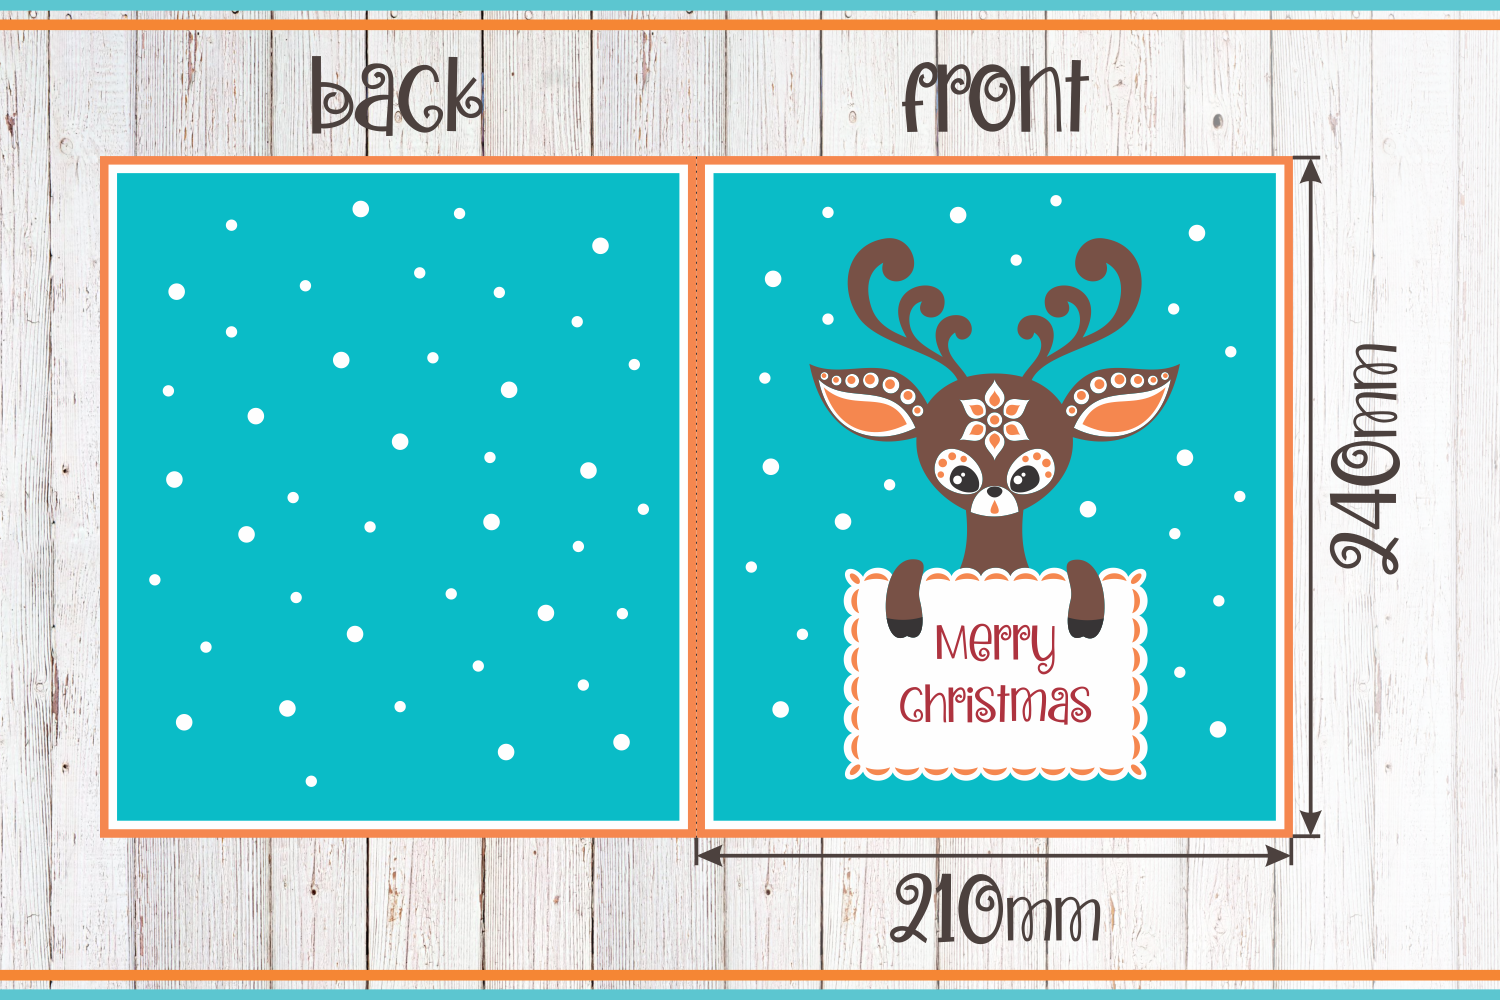 3d Layered Christmas Greeting Card With Deer By Olga Belova Thehungryjpeg Com